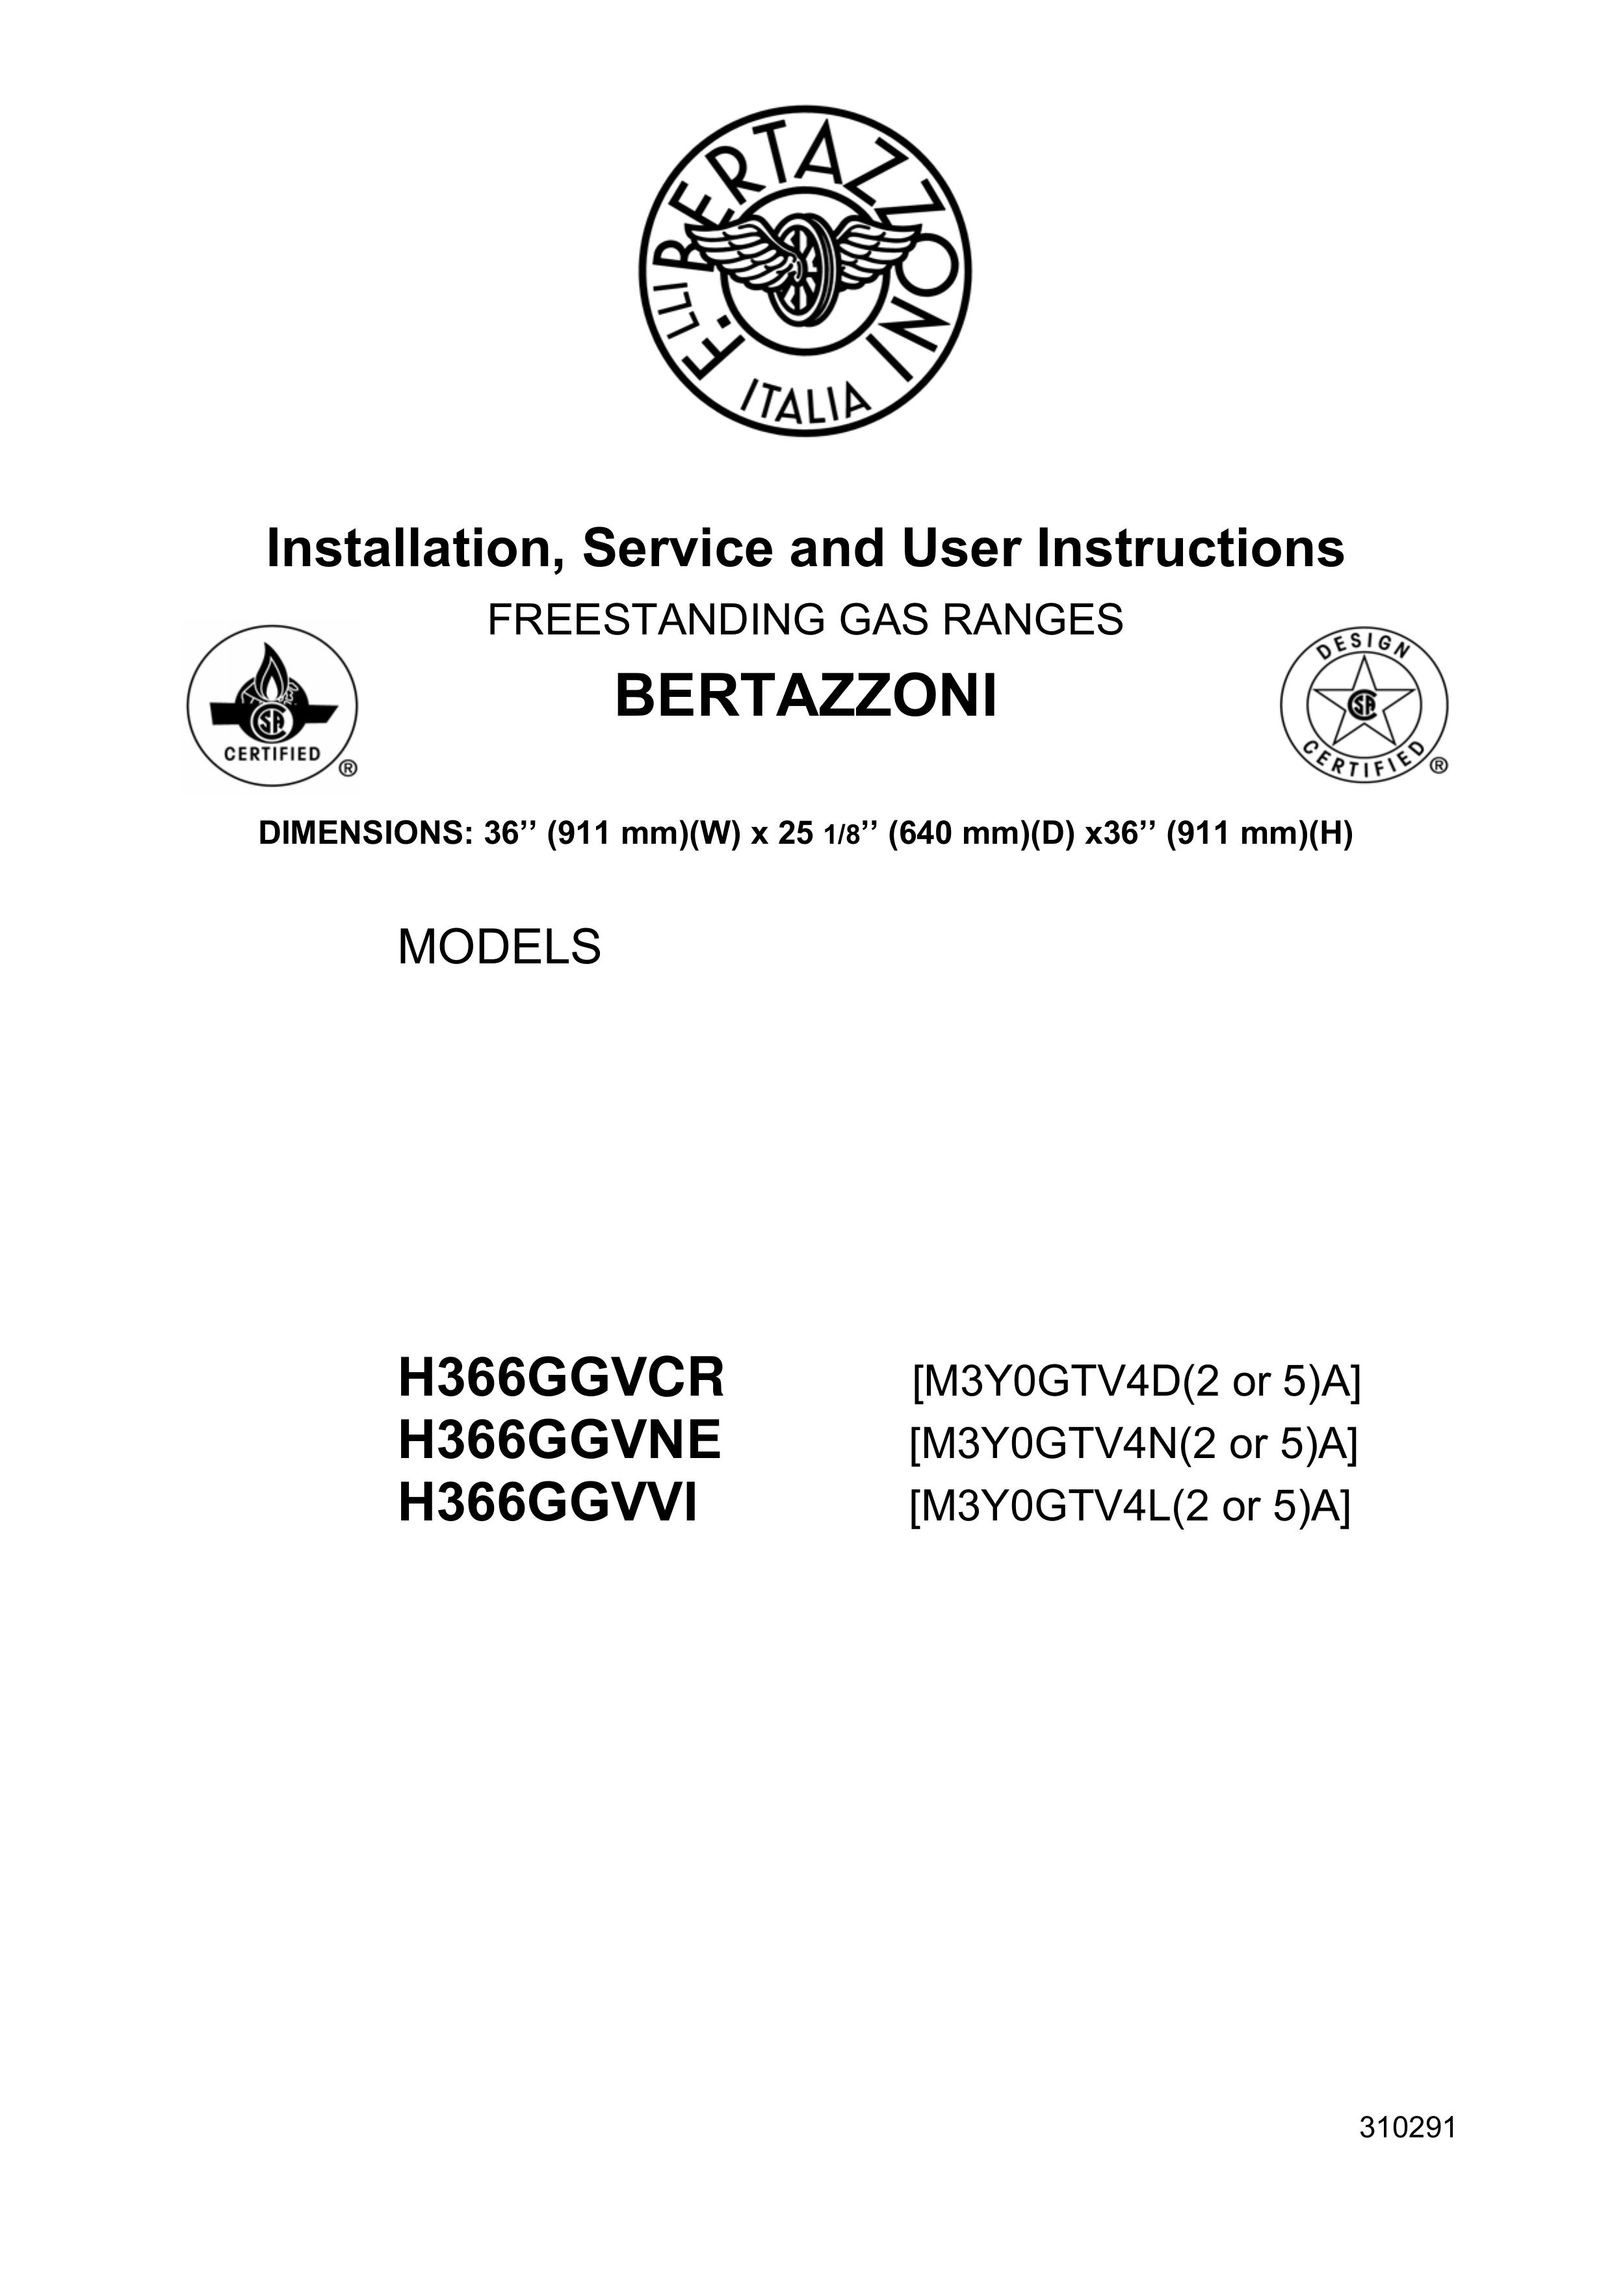 Bertazzoni H366GGVVI Range User Manual